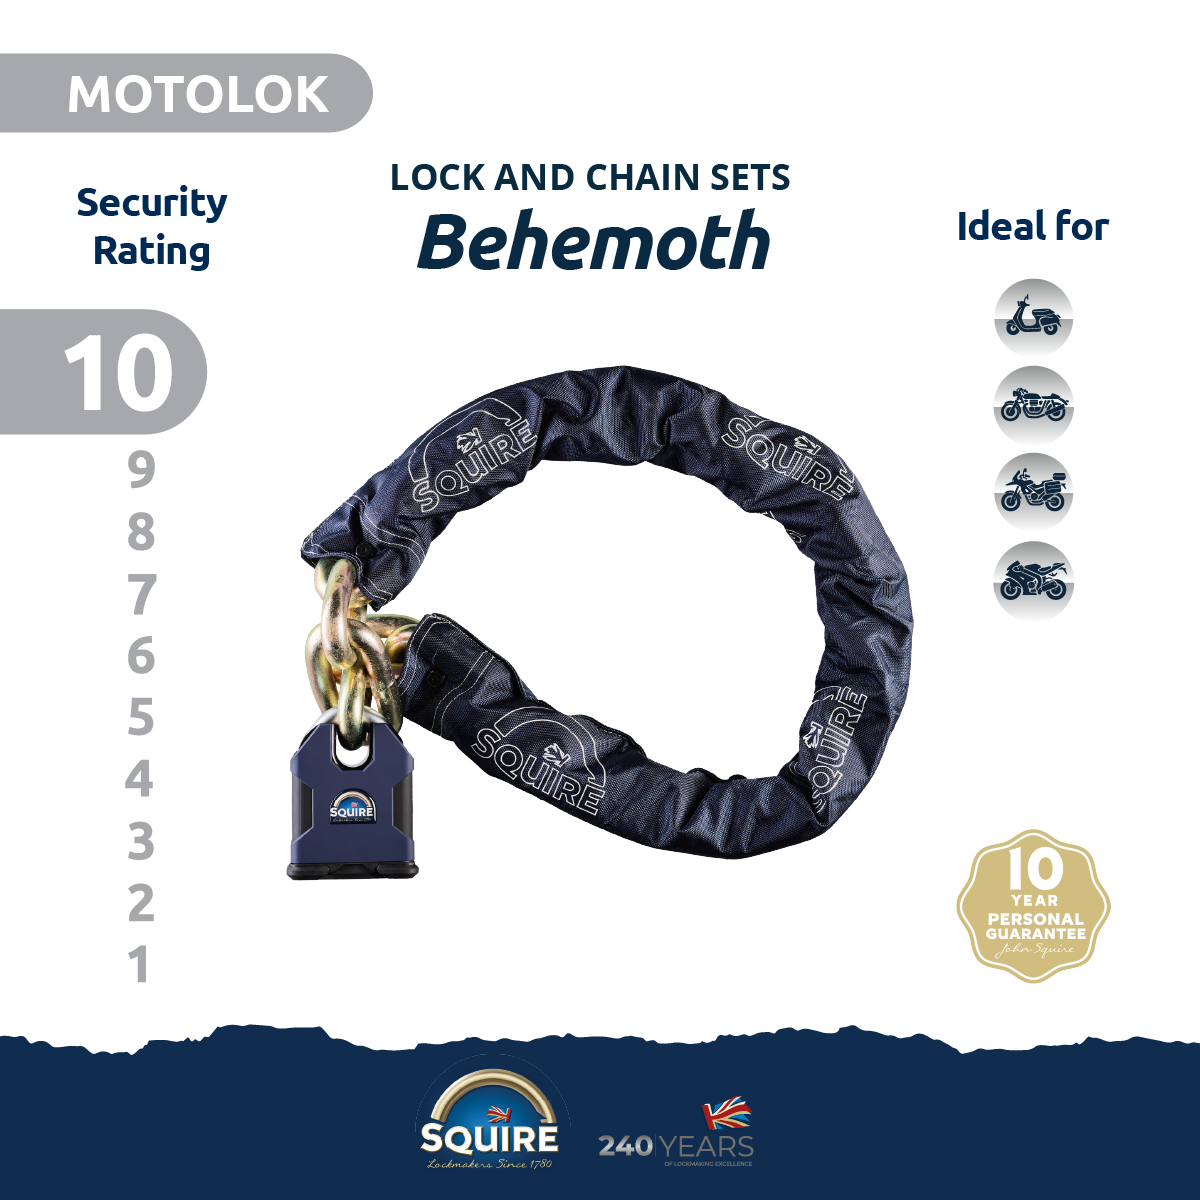 Behemoth Padlock and Chain